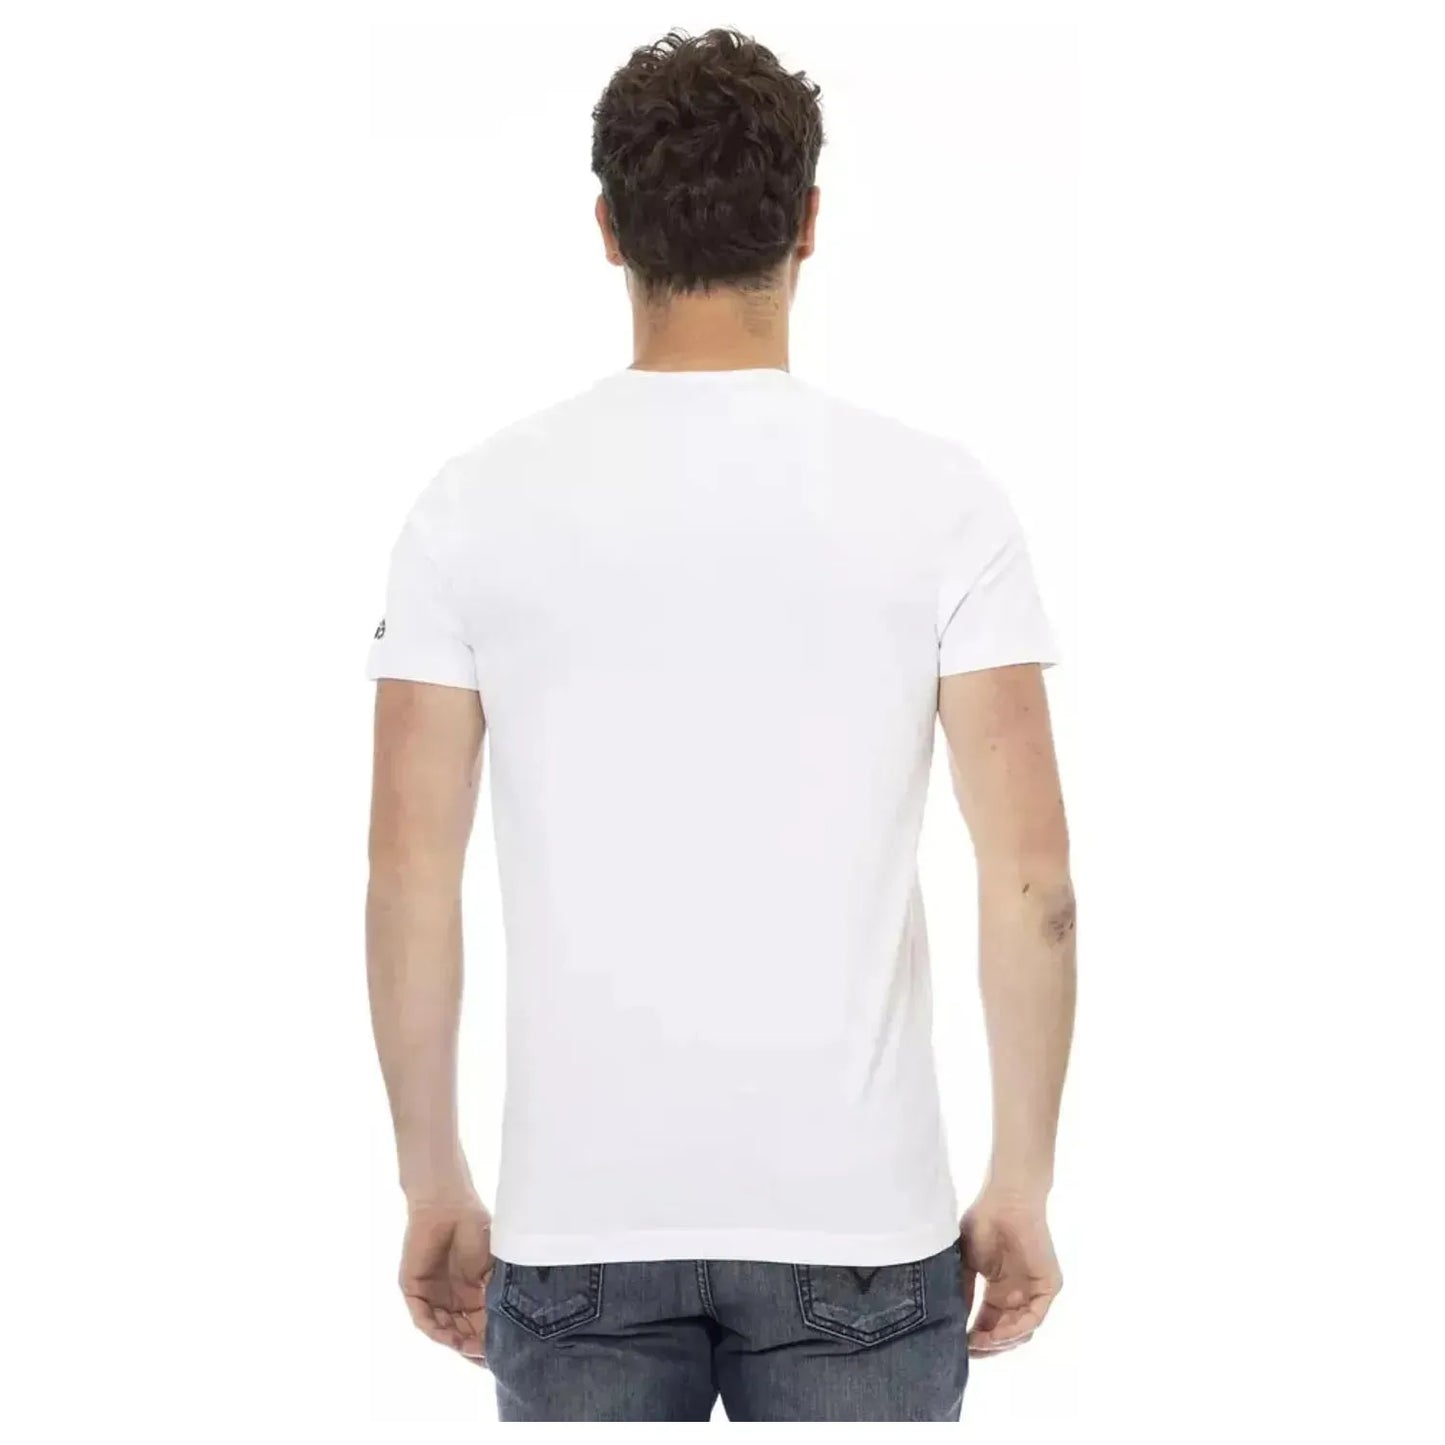 Trussardi Action Sleek White Graphic Tee with Artistic Print white-cotton-t-shirt-90